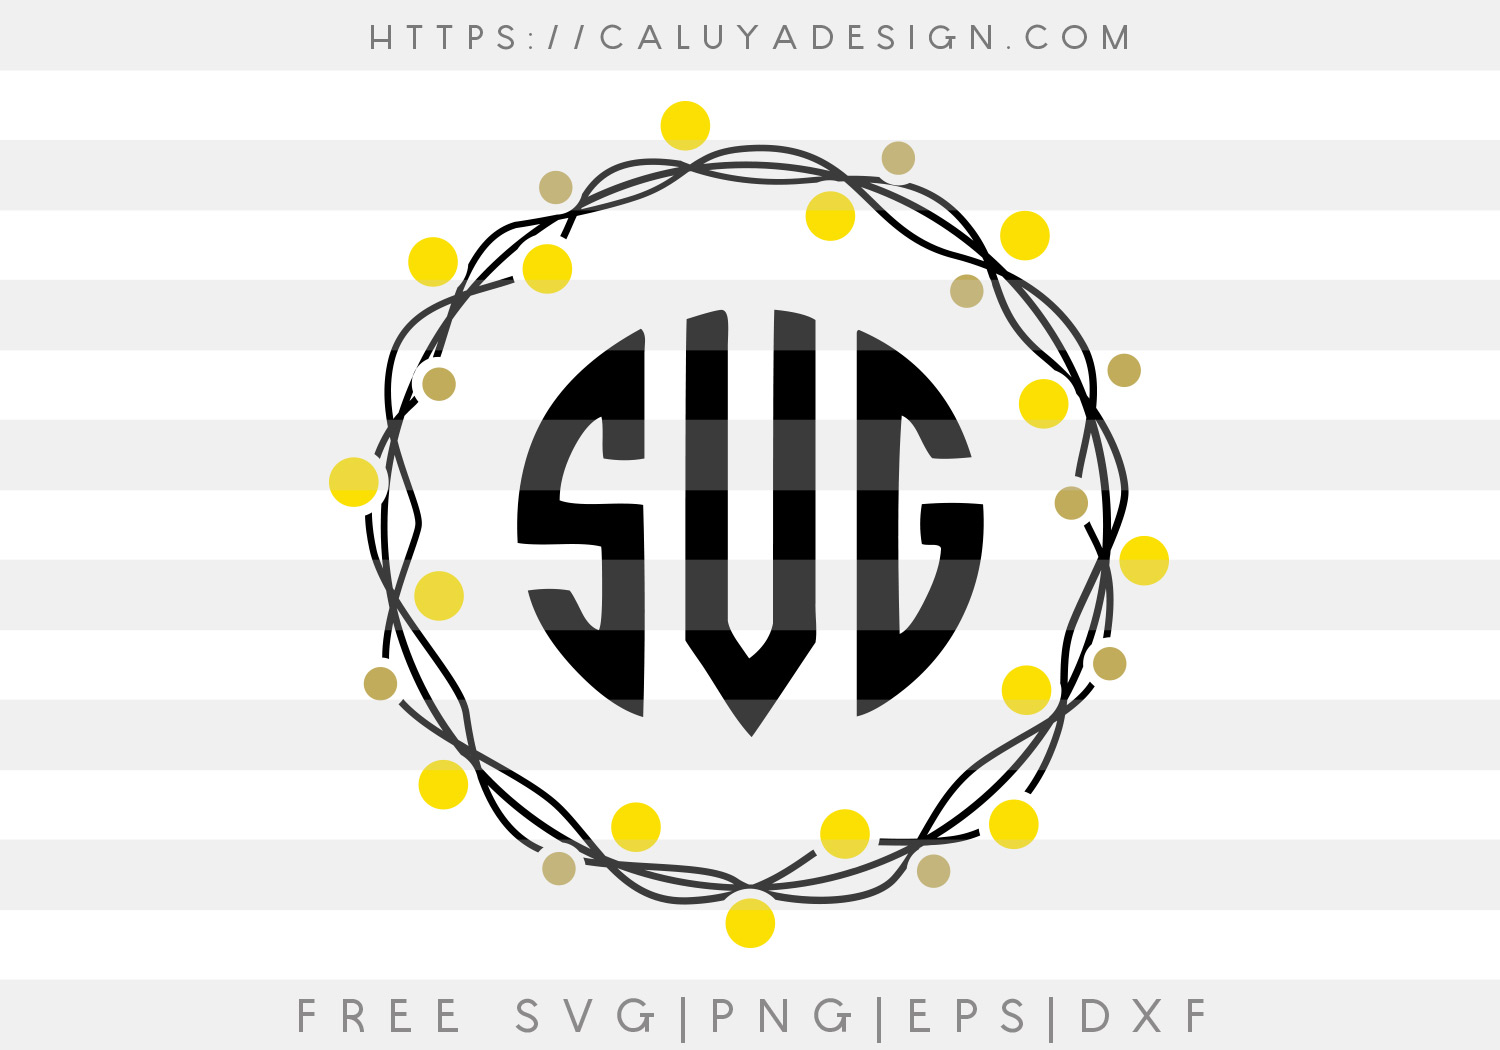 Free Glowing Llight Monogram SVG Cut File